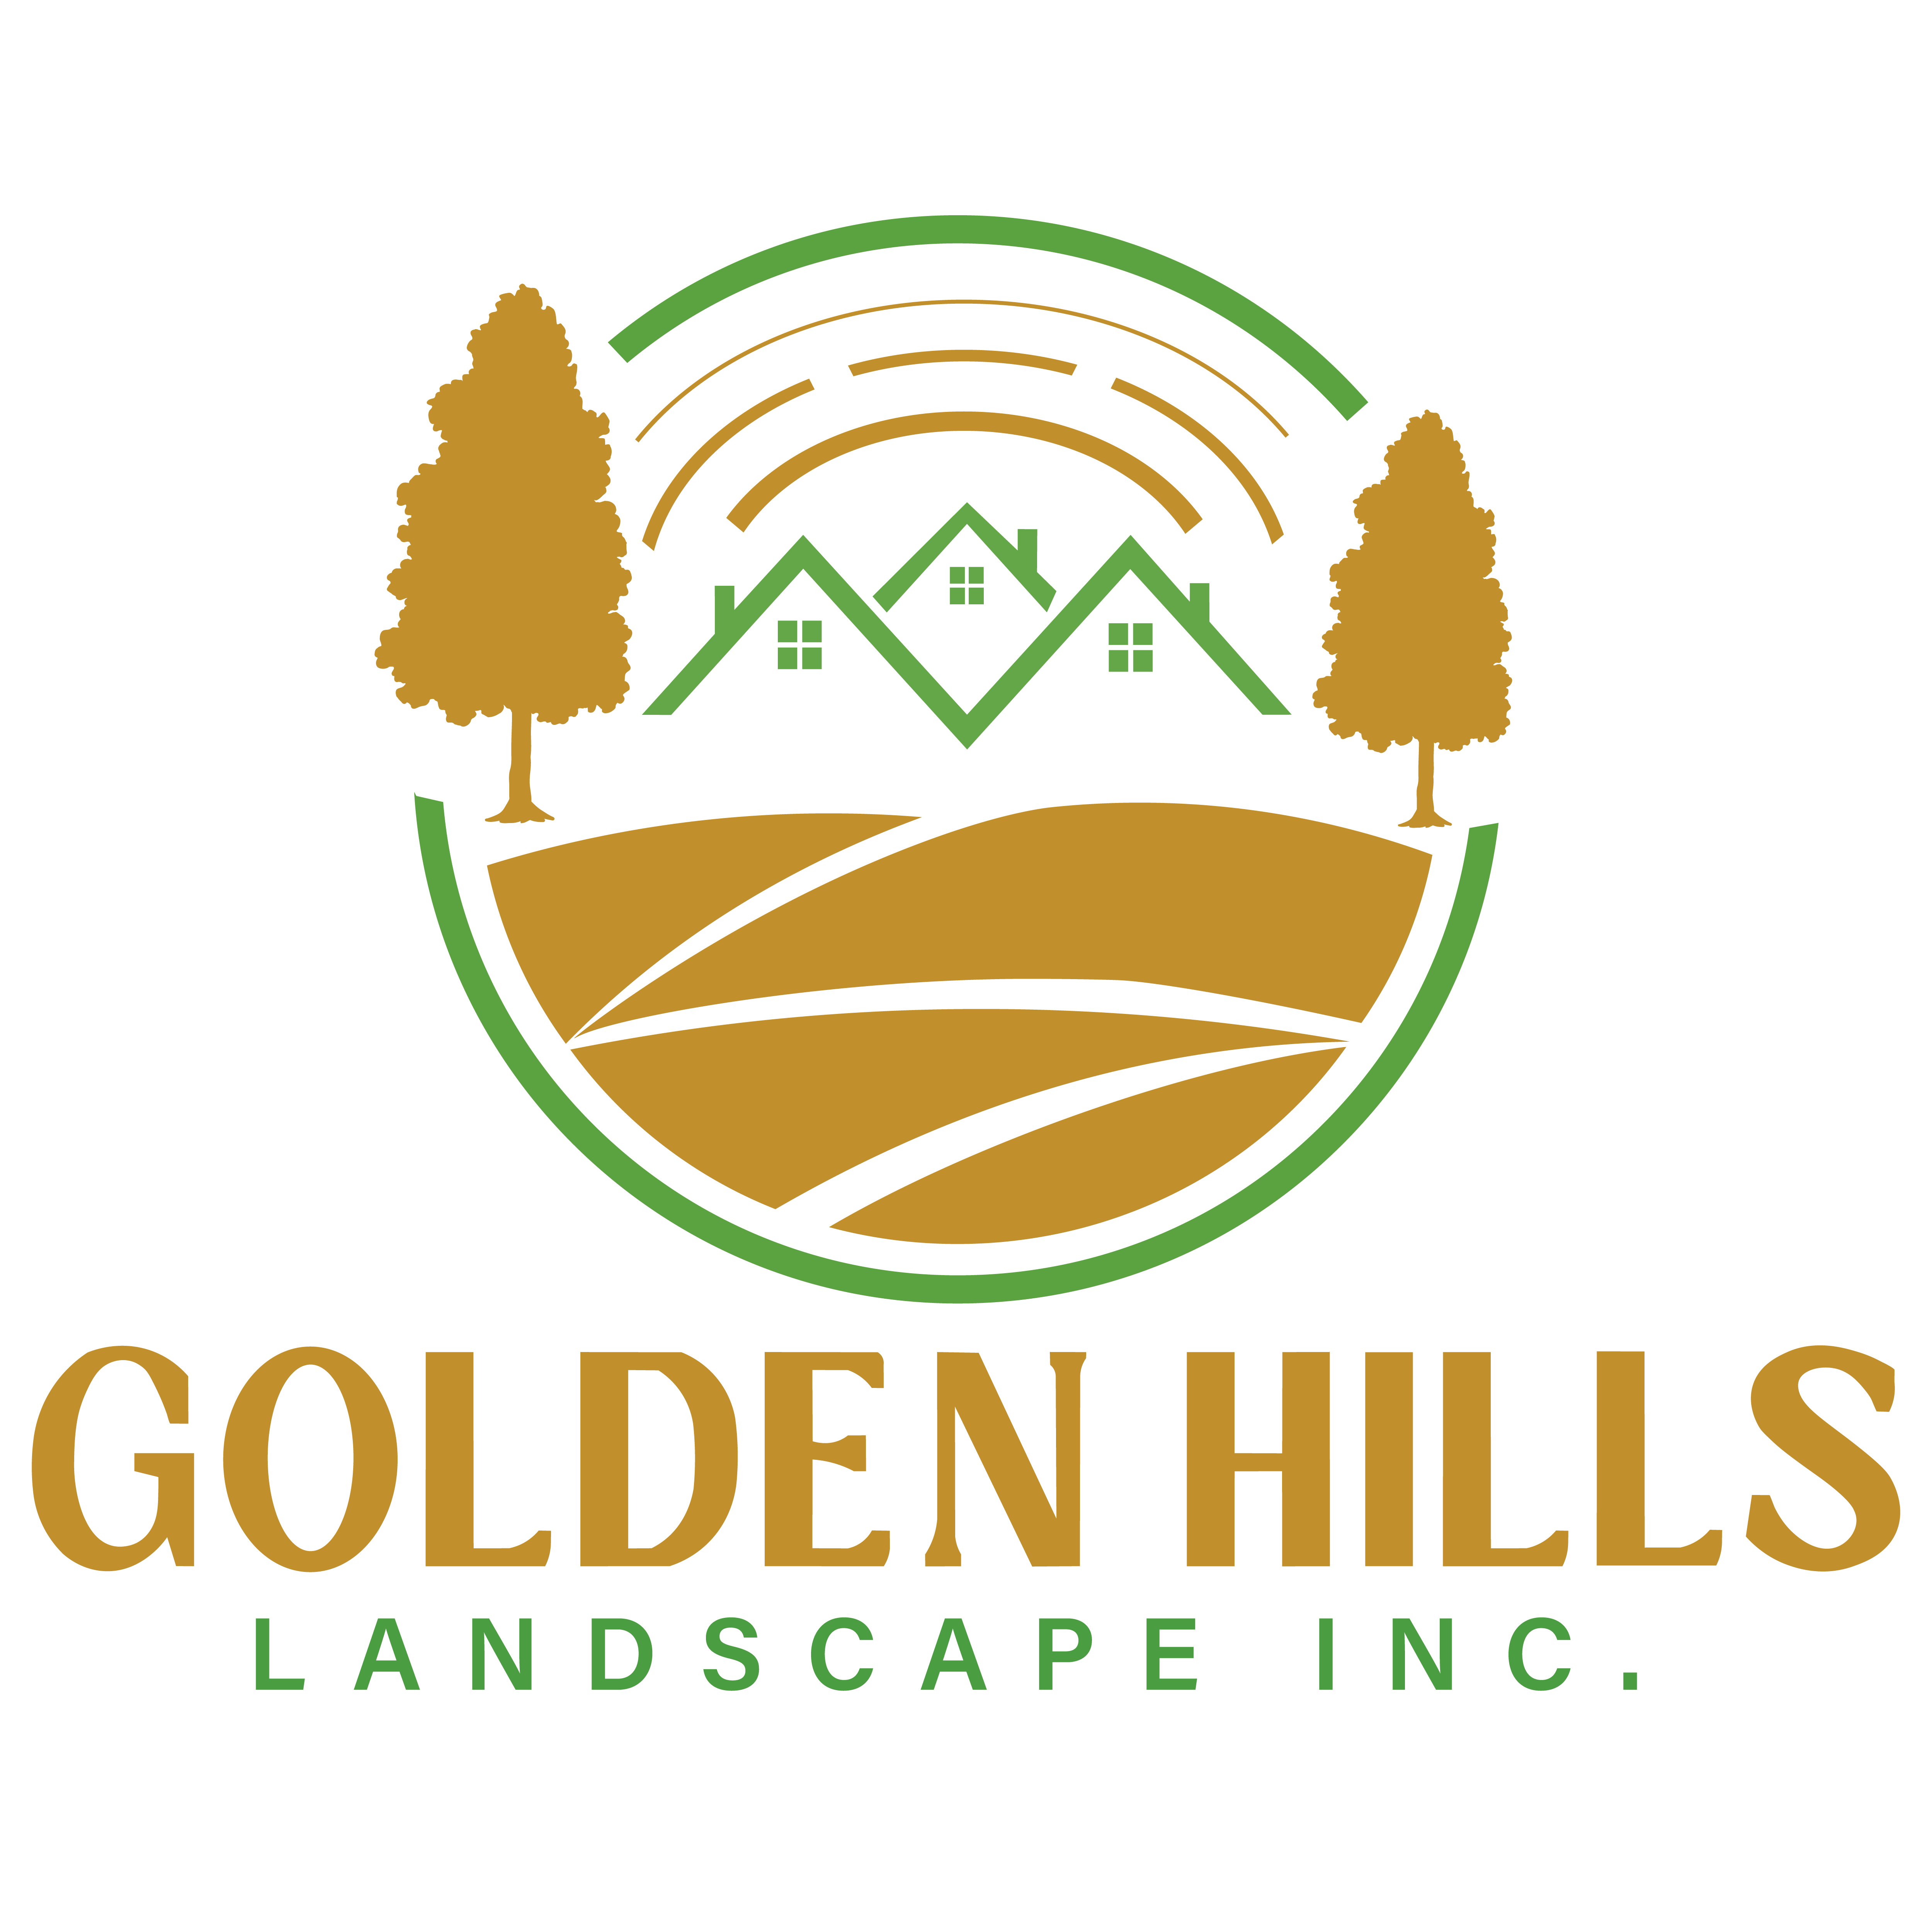 Golden Hills Landscape INC